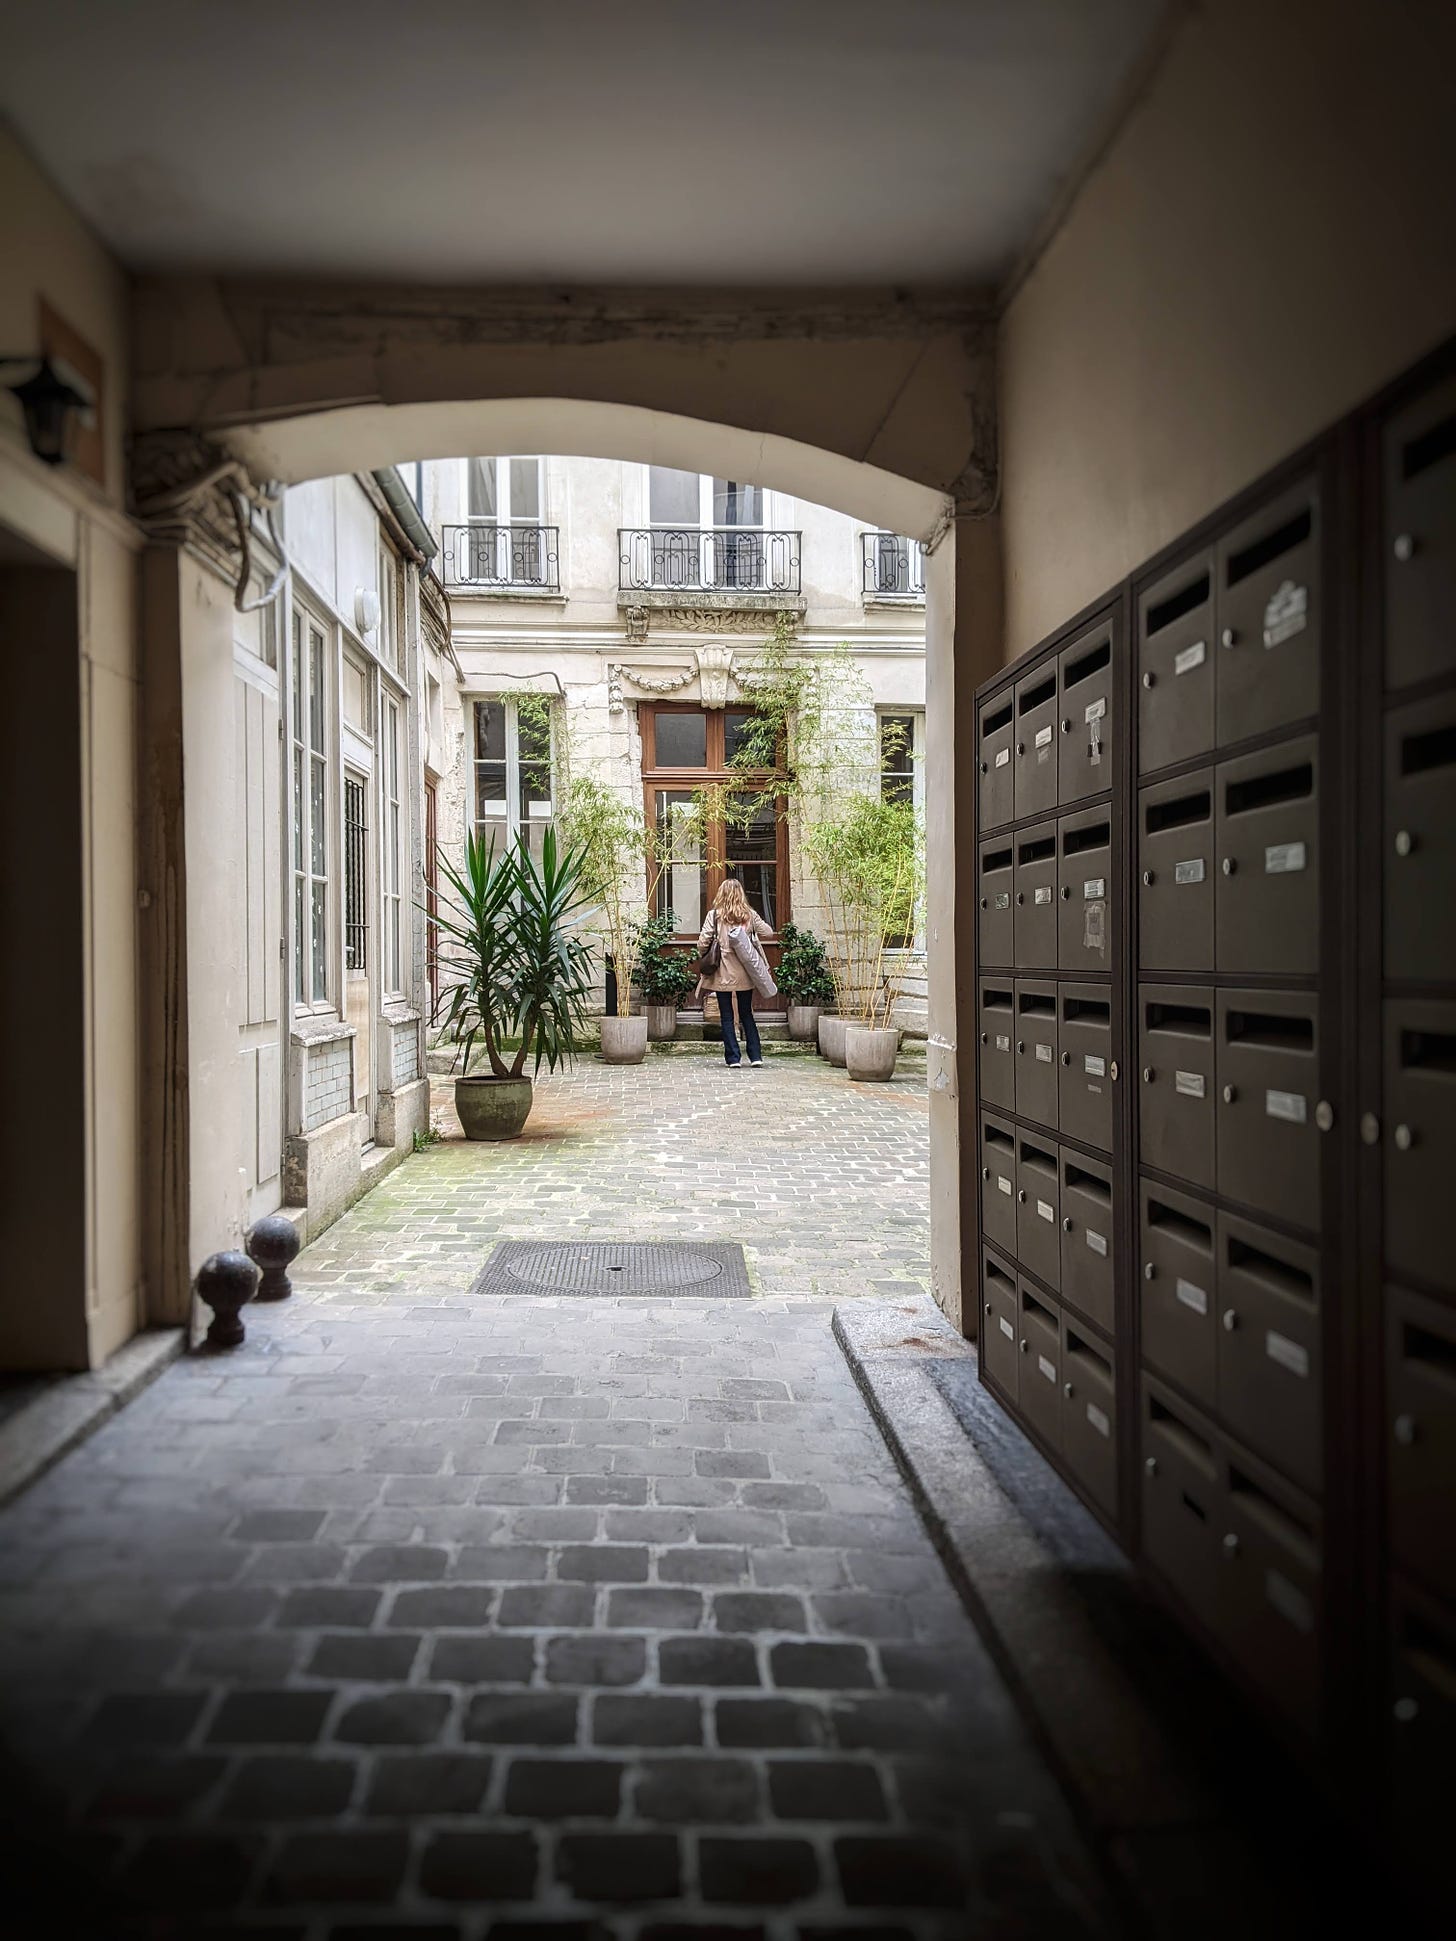 Entrance to Rasa Yoga Rive Gauche in Paris, France